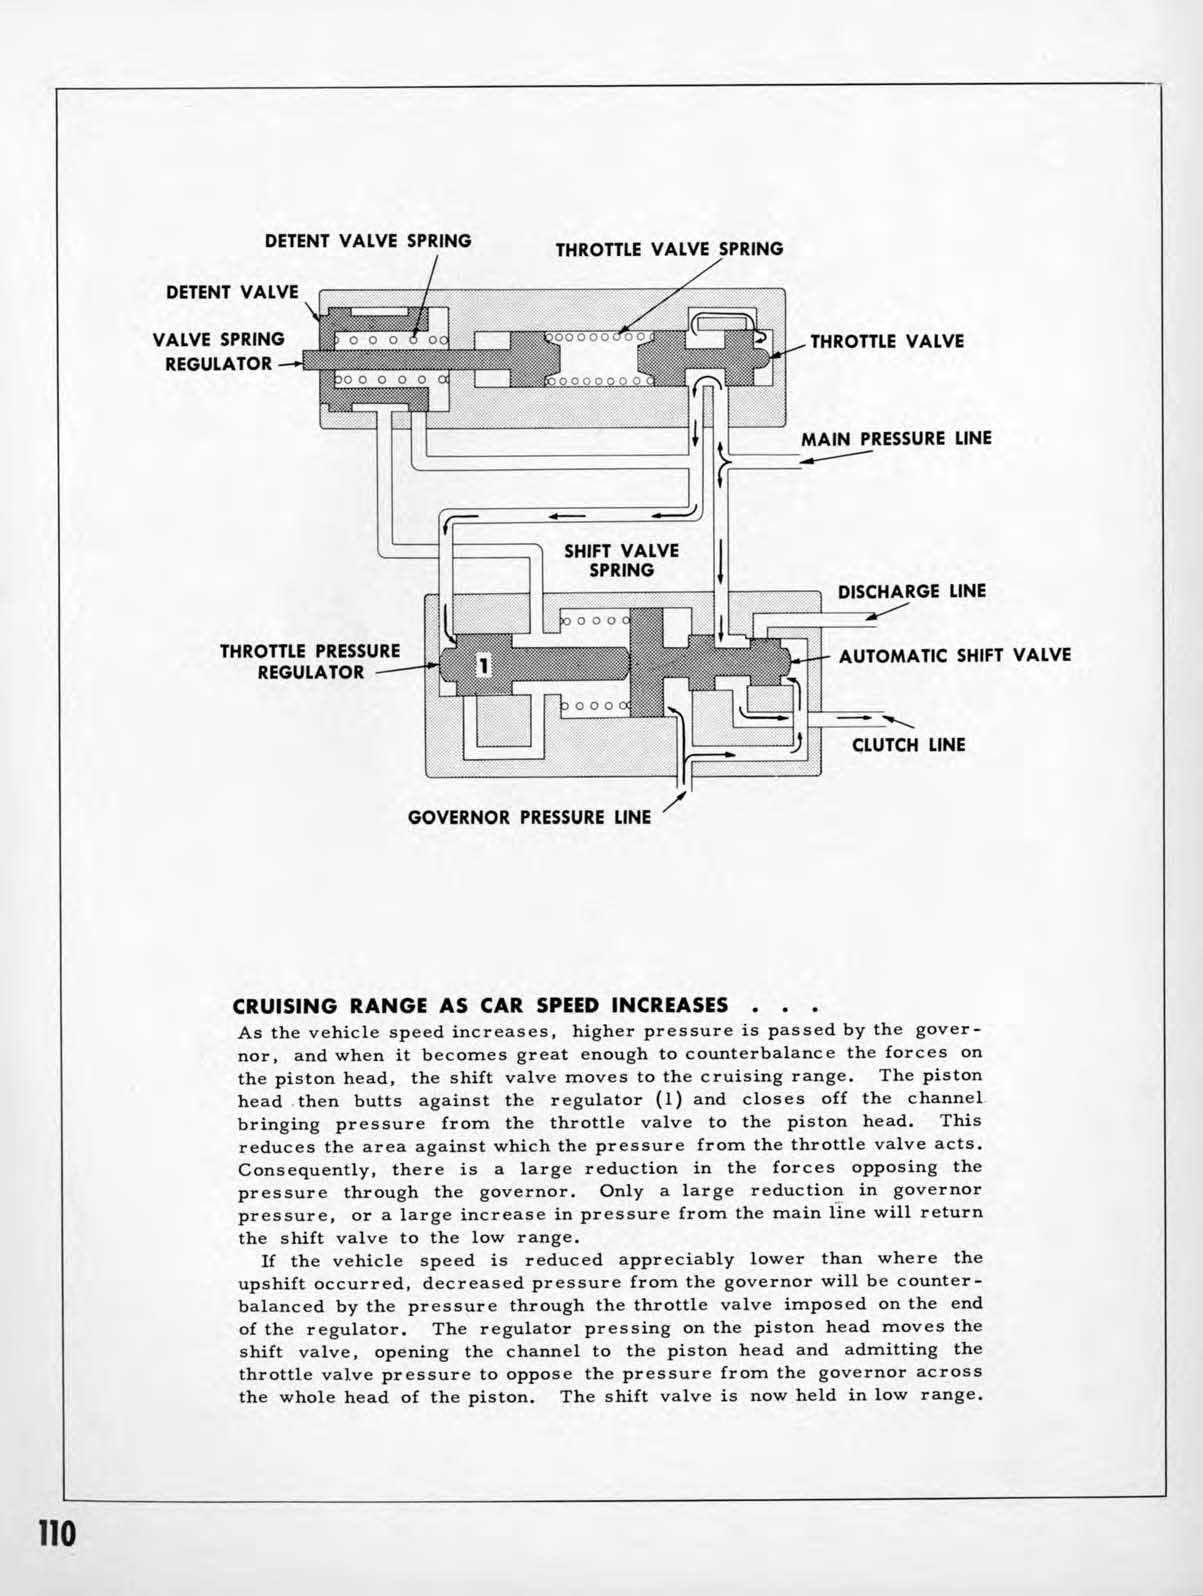 1953_Chevrolet_Engineering_Features-110